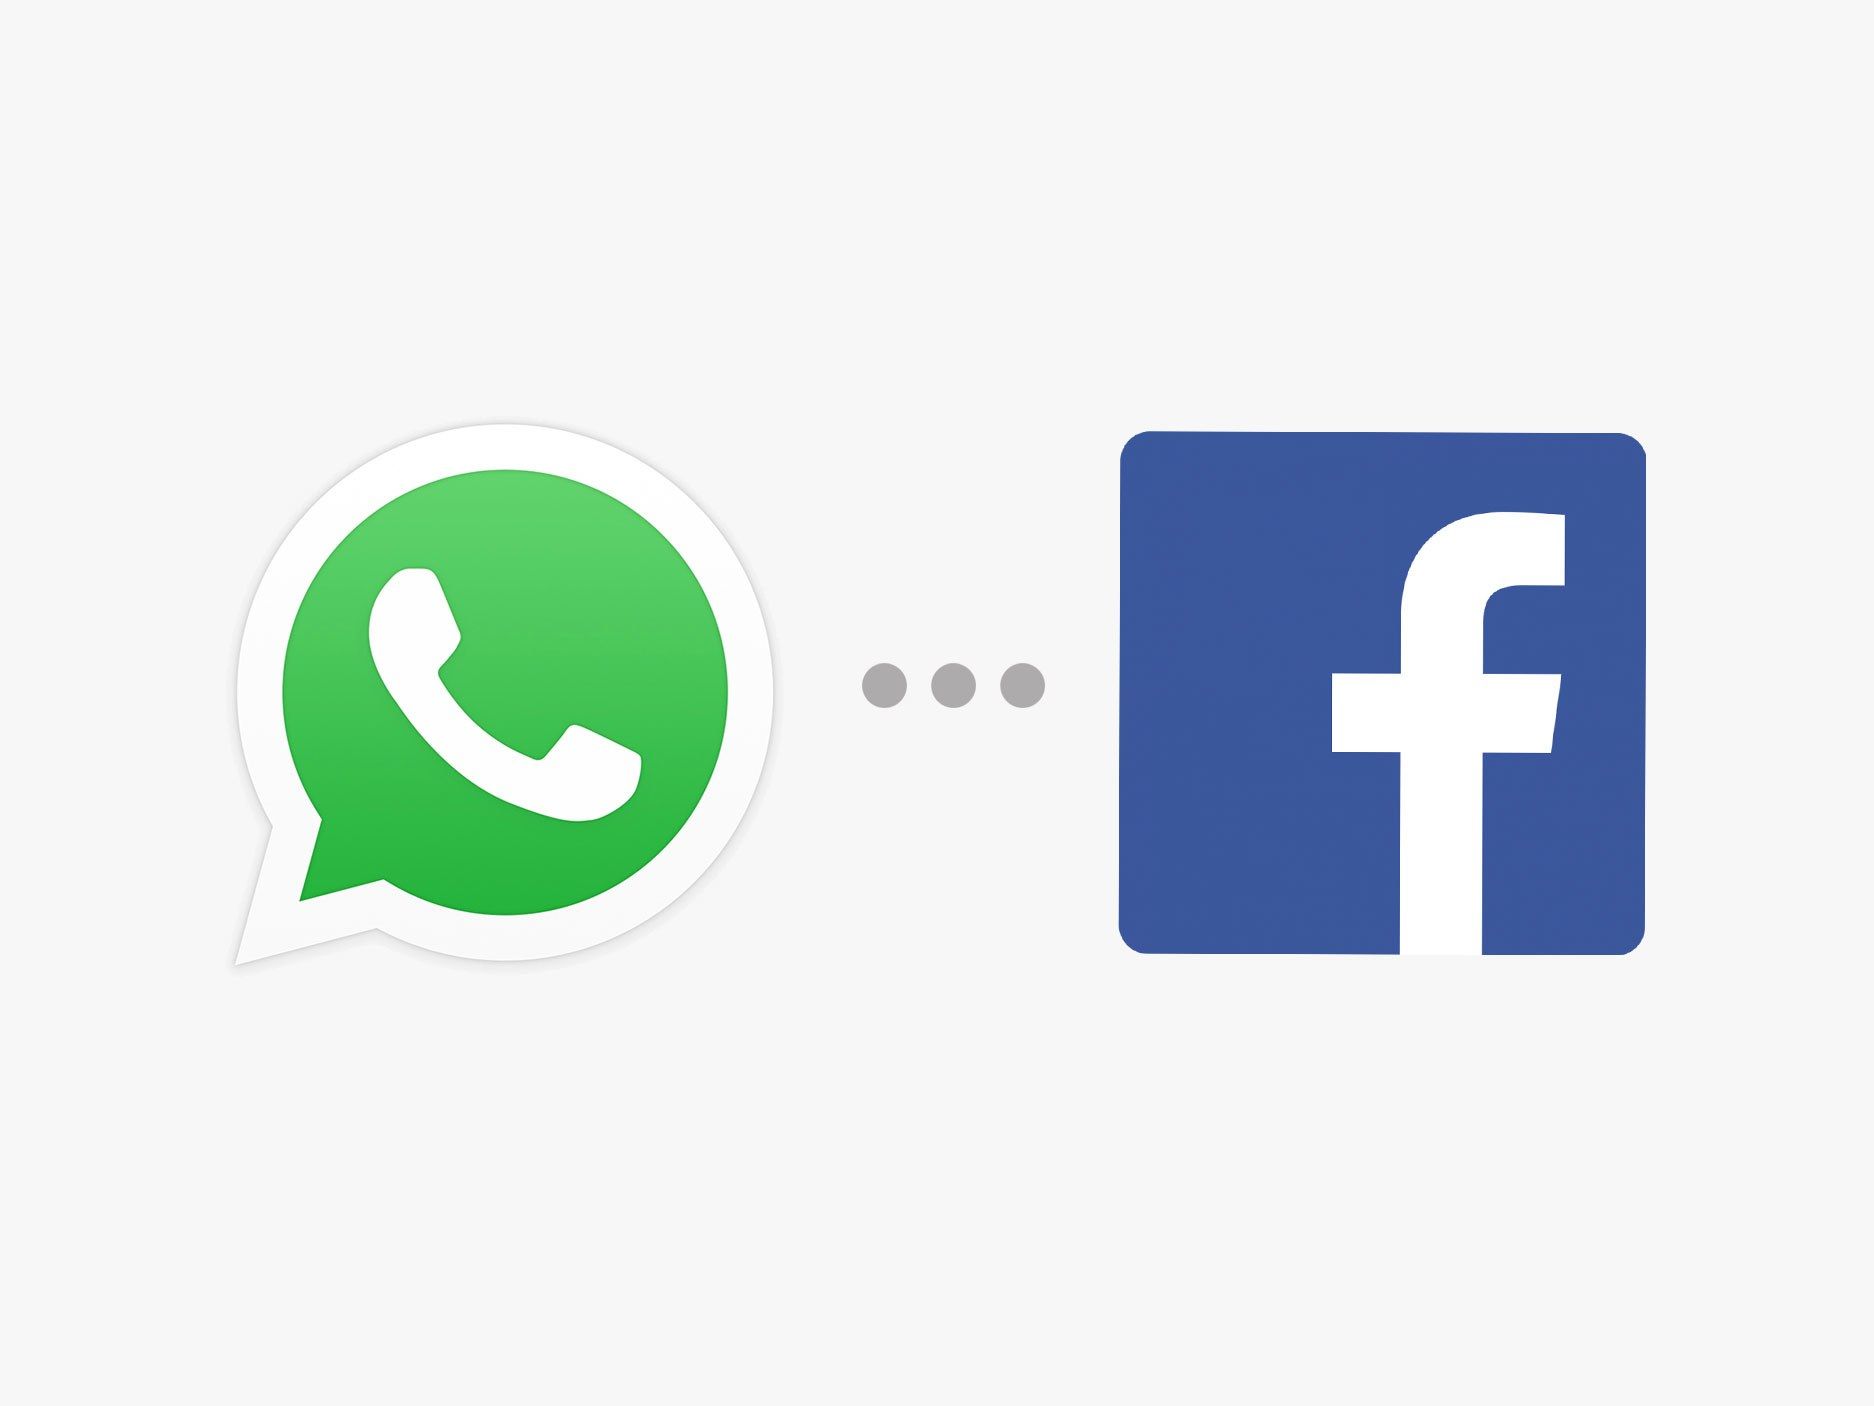 WhatsApp Payments, pagos desde WhatsApp, llegarán a latinoamérica